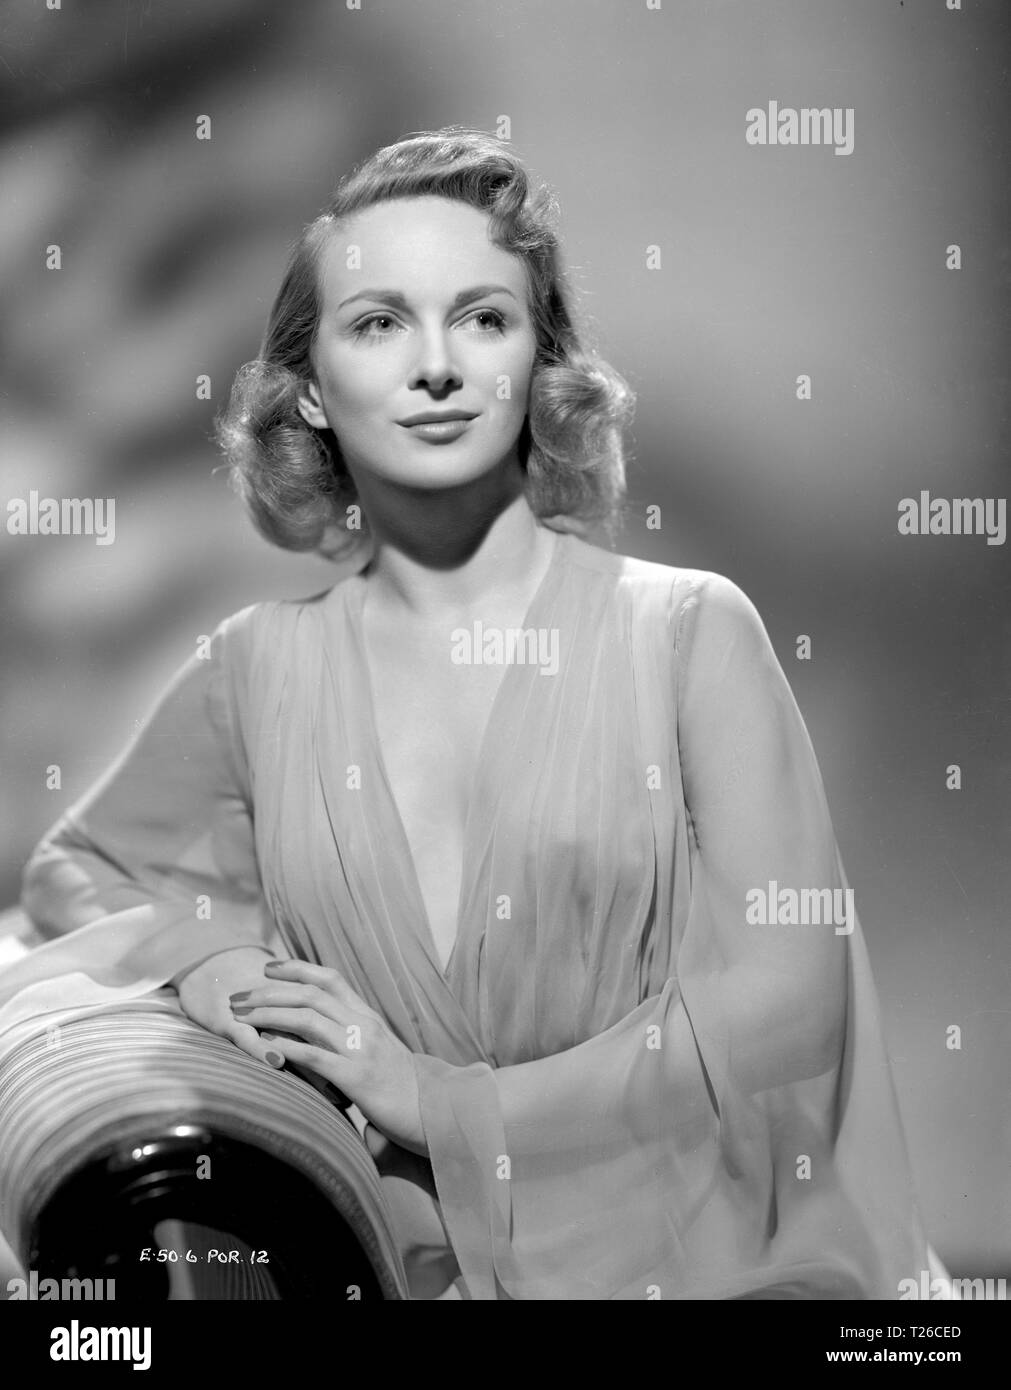 Giovani mogli racconto (1951) Joan Greenwood, Data: 1951 Foto stock - Alamy